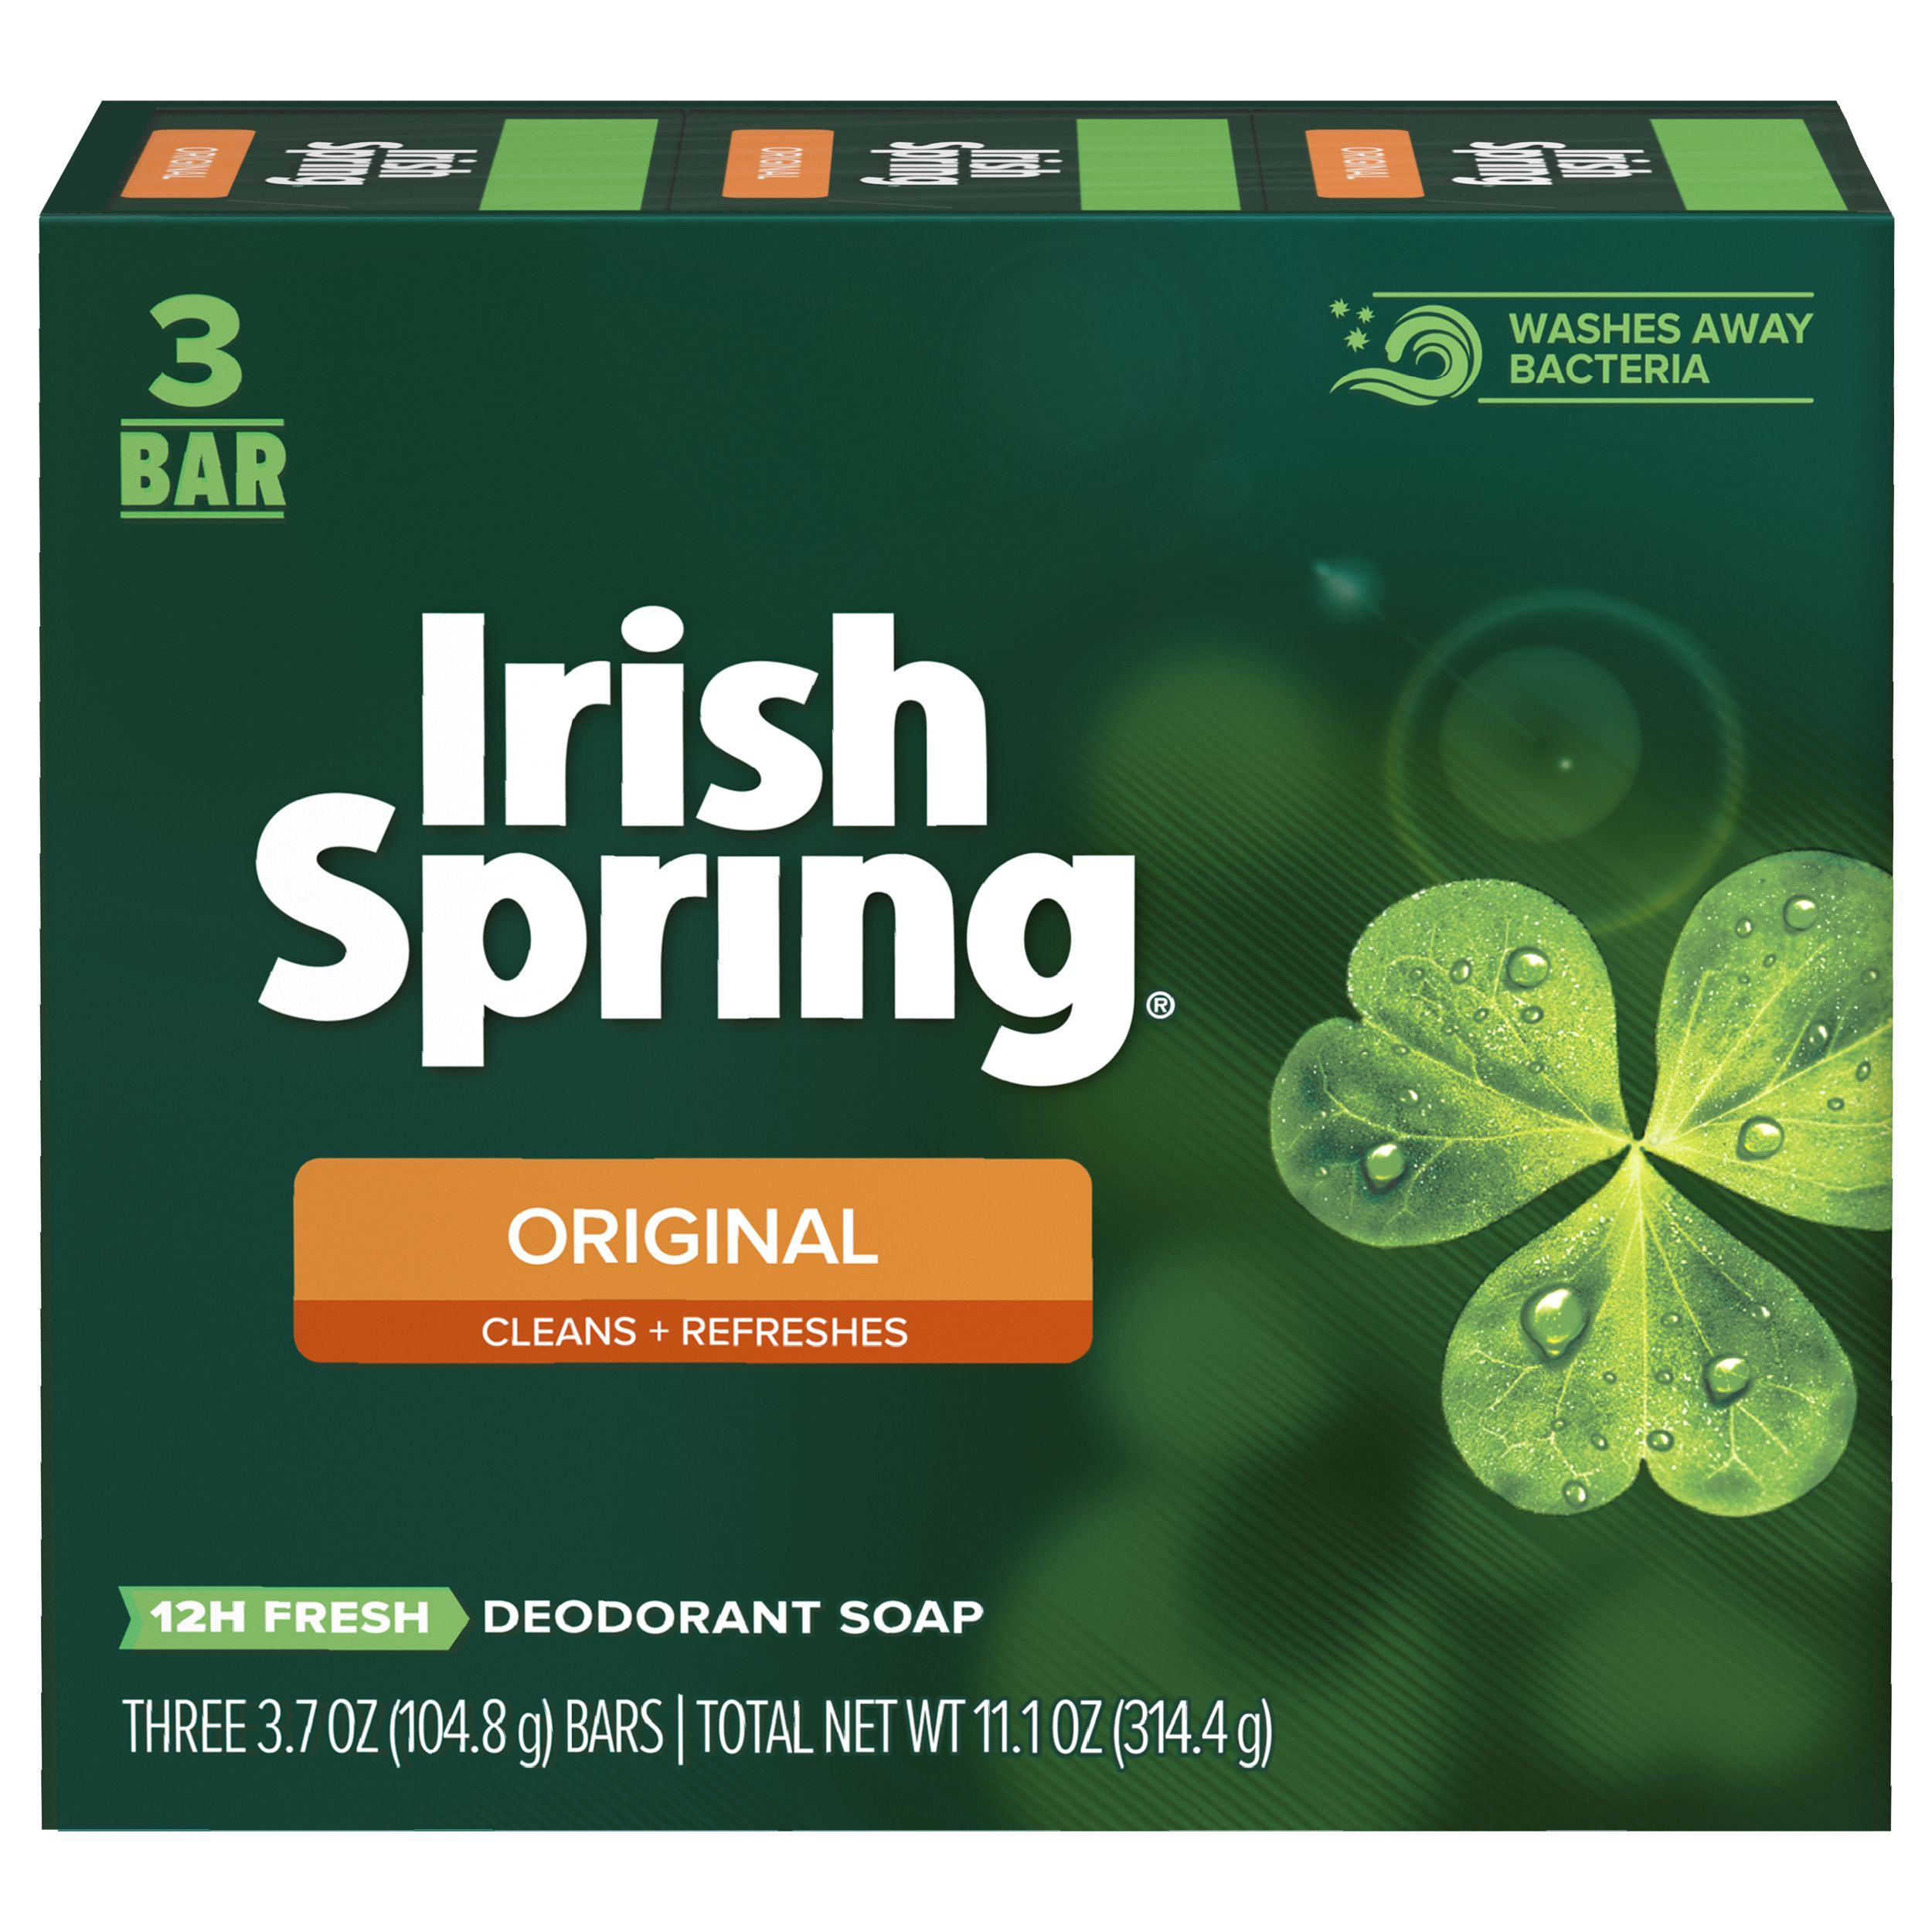 Irish Spring Original Clean Deodorant Bar Soap for Men,  for All Skin Types, 3.7oz, 3 Pack - image 1 of 8